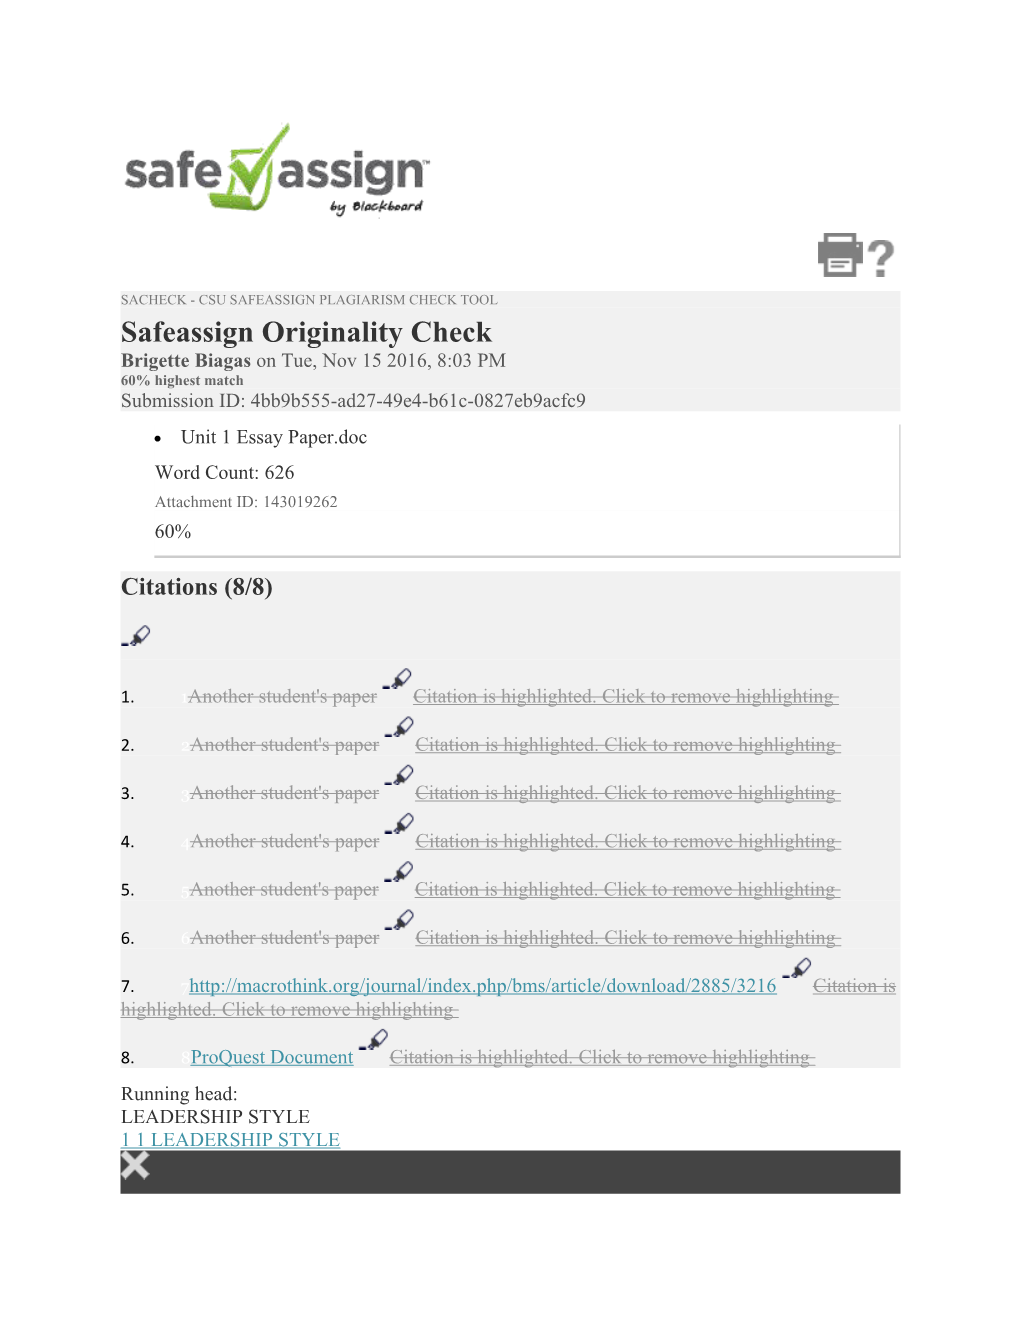 Sacheck - CSU Safeassign Plagiarism Check Tool